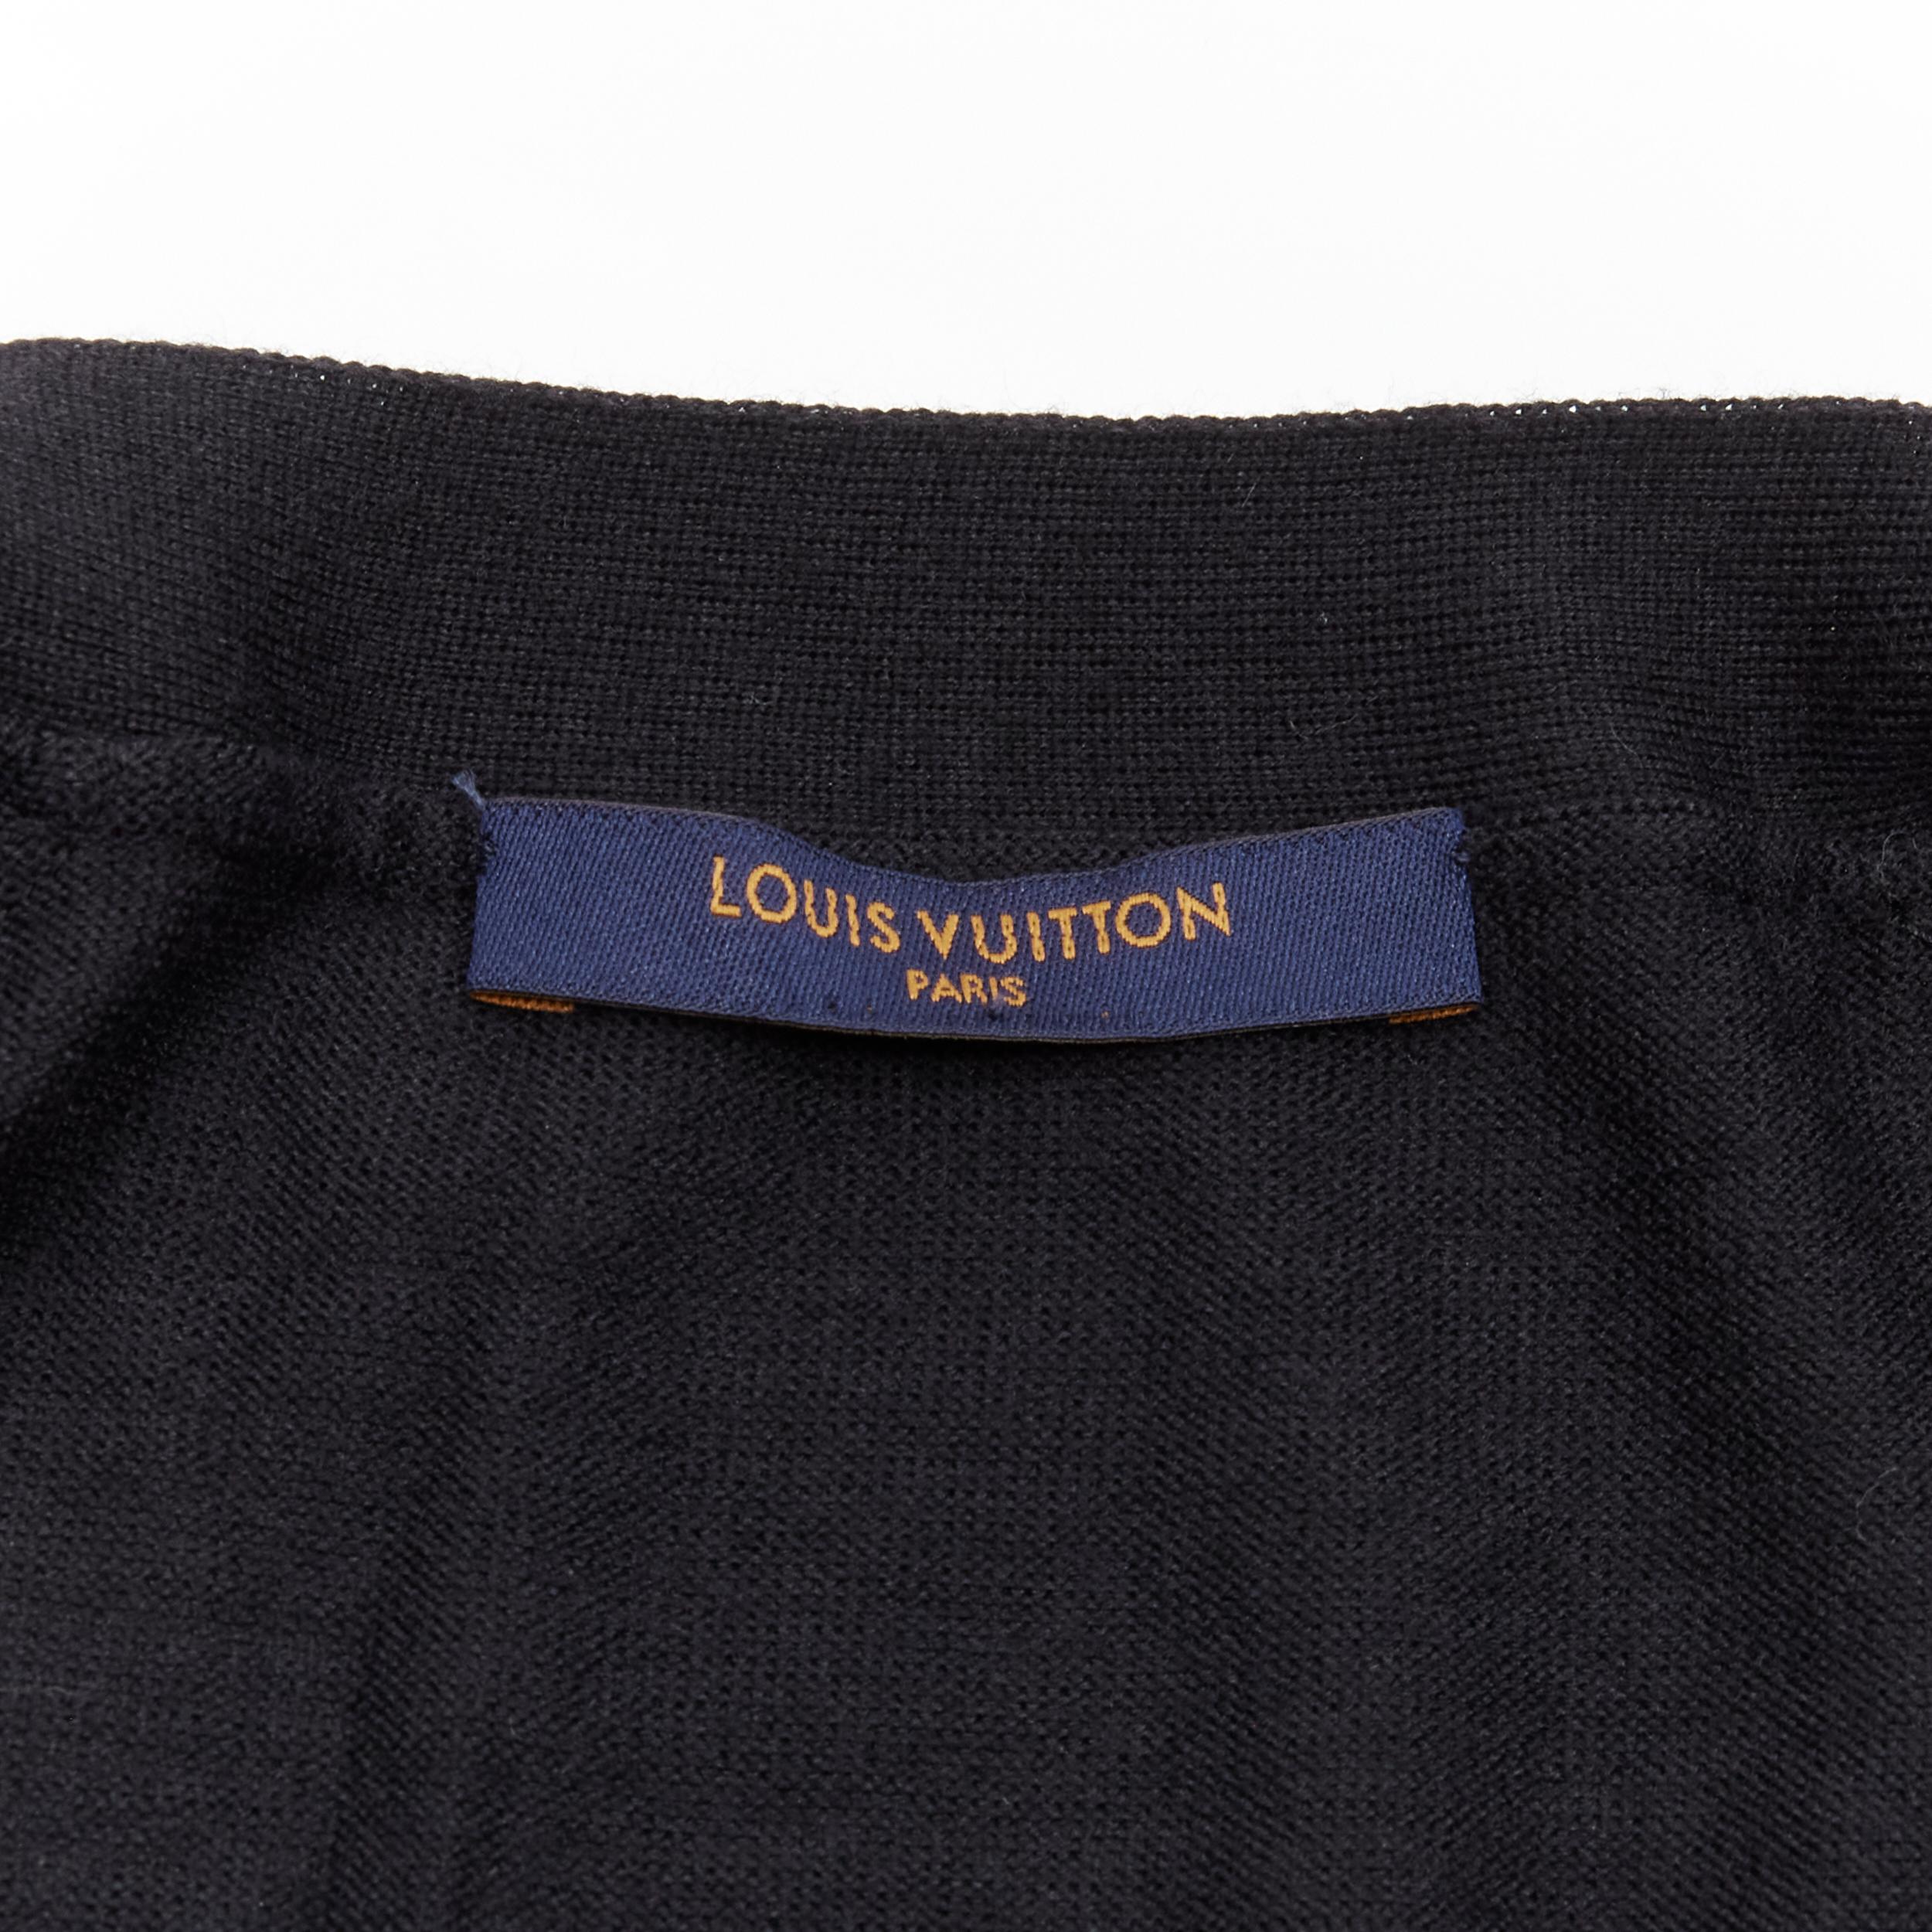 LOUIS VUITTON Catogram Grace Coddington black silk monogram cardigan sweater S 3